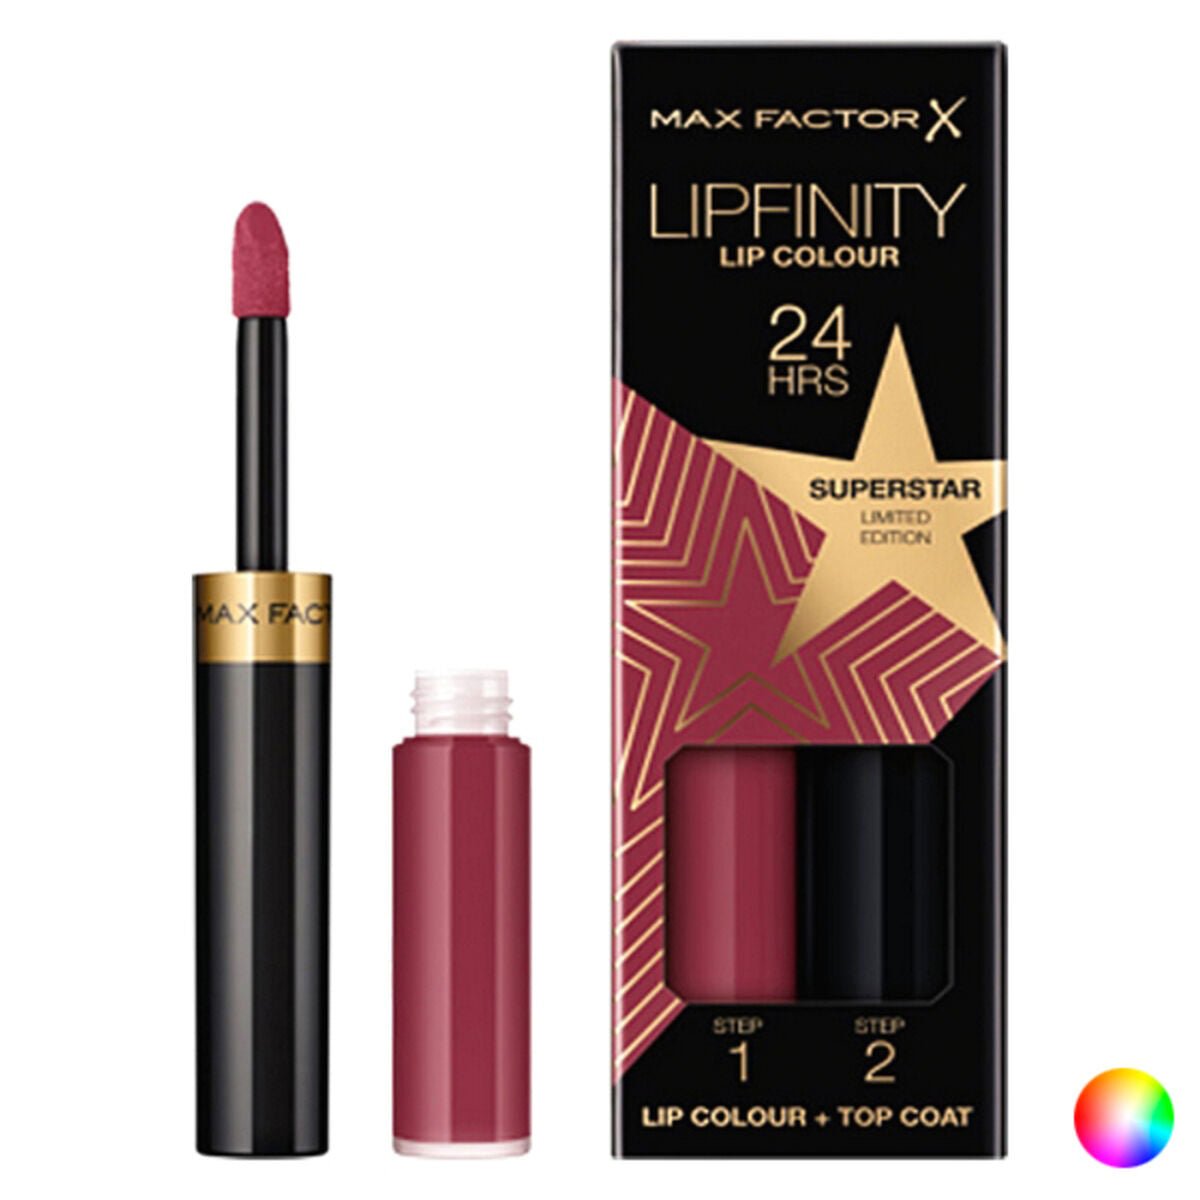 Lipstick Lipfinity Max Factor - JOSEPH BEAUTY